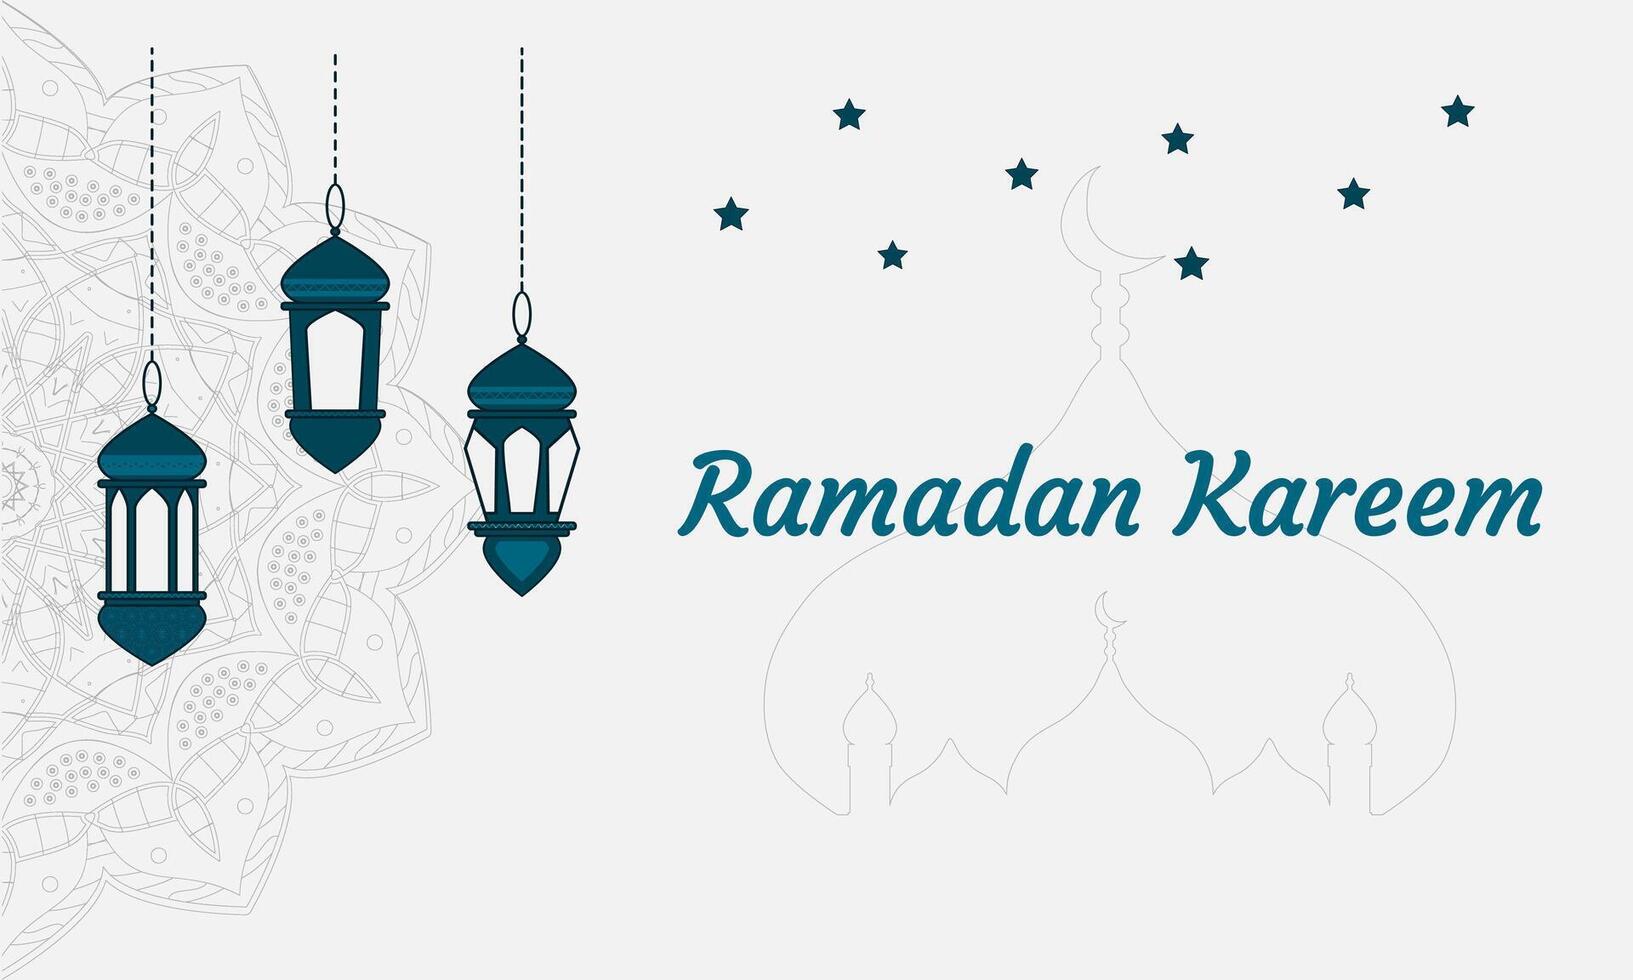 Ramadan Kareem background concept with lantern lamp. Vector illustration.